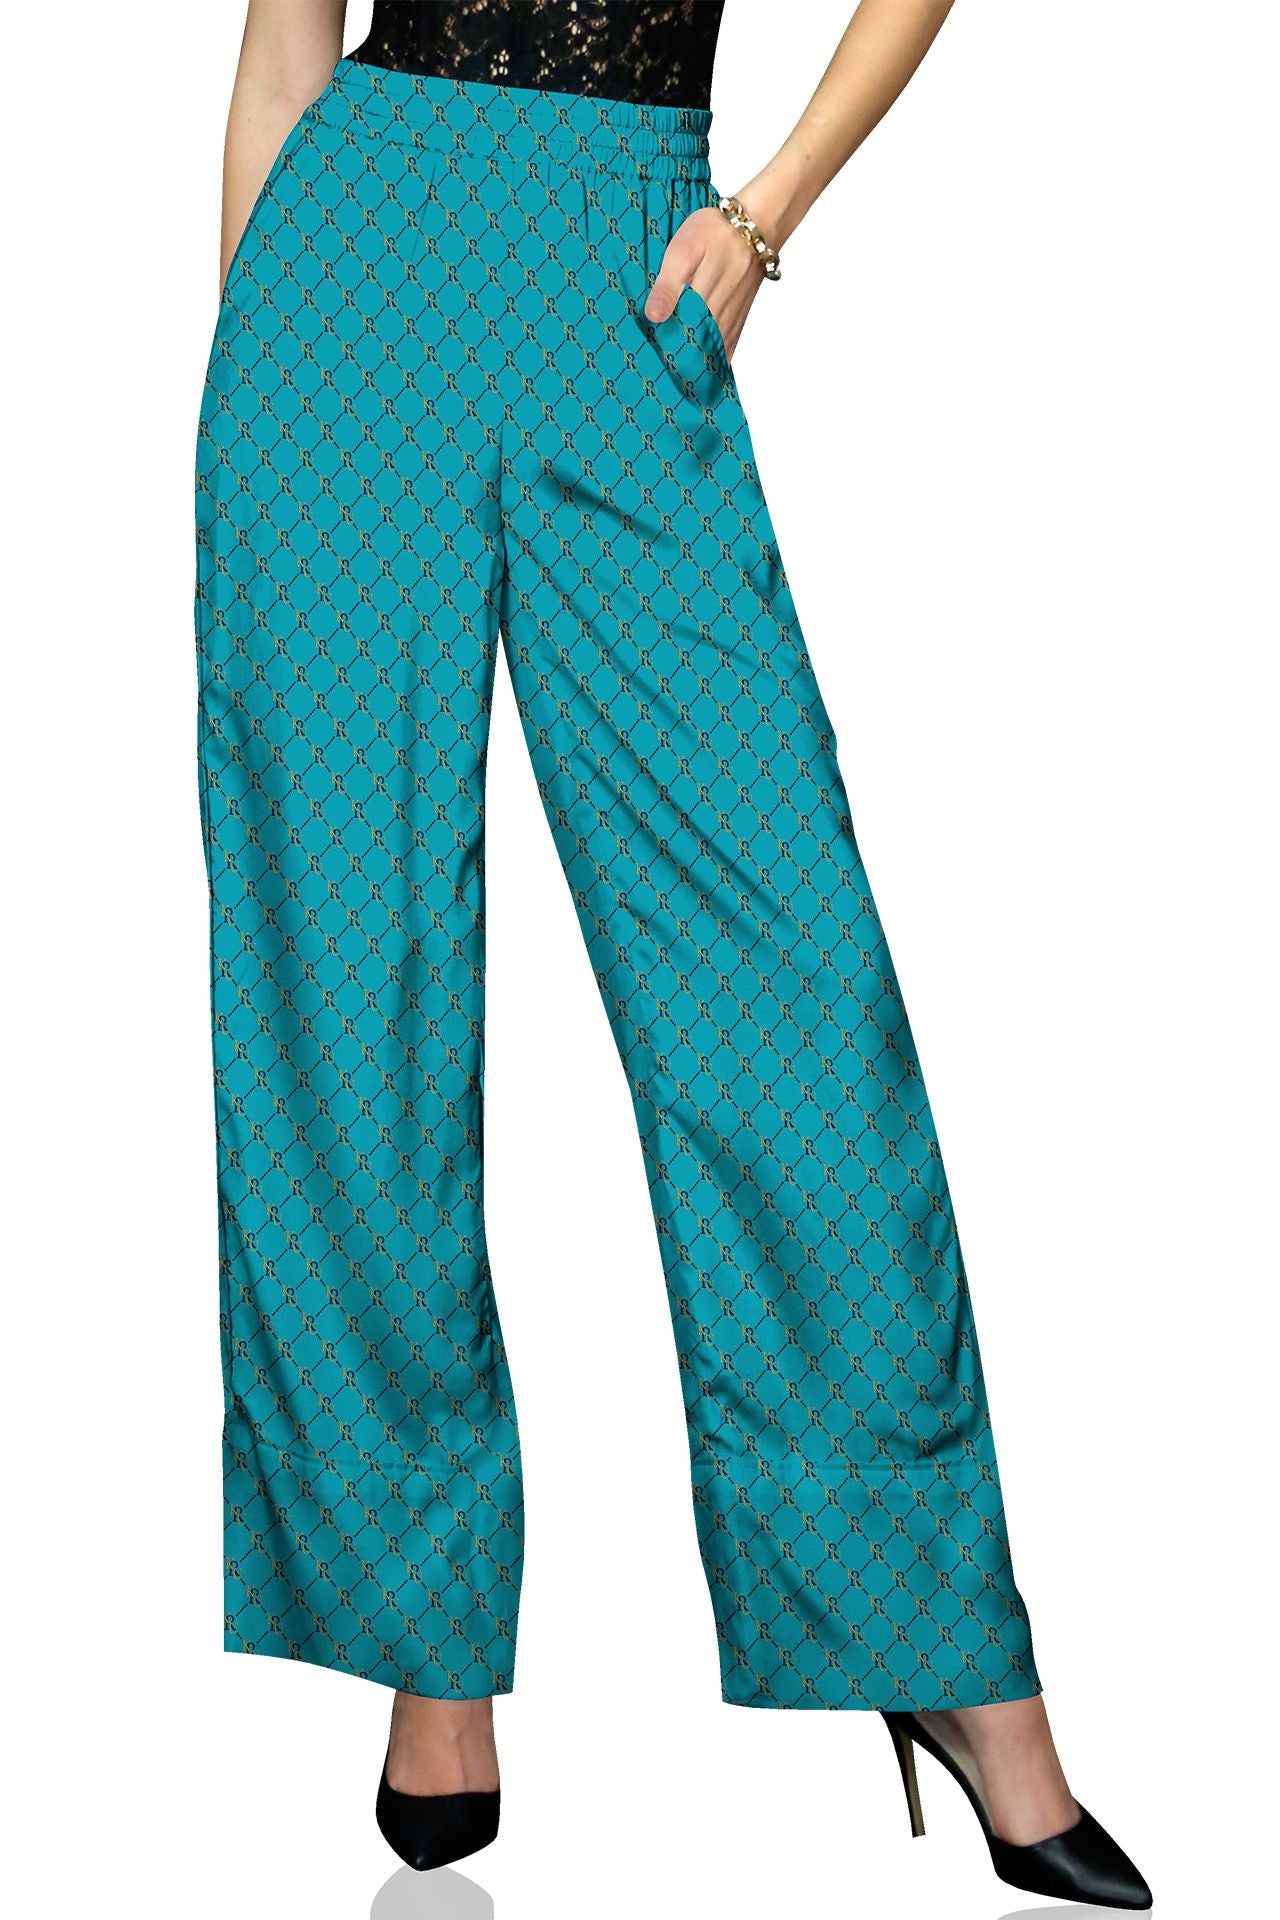 "light blue pants" "plazzo pant for women" "womens plazzo pants" "Kyle X Shahida"